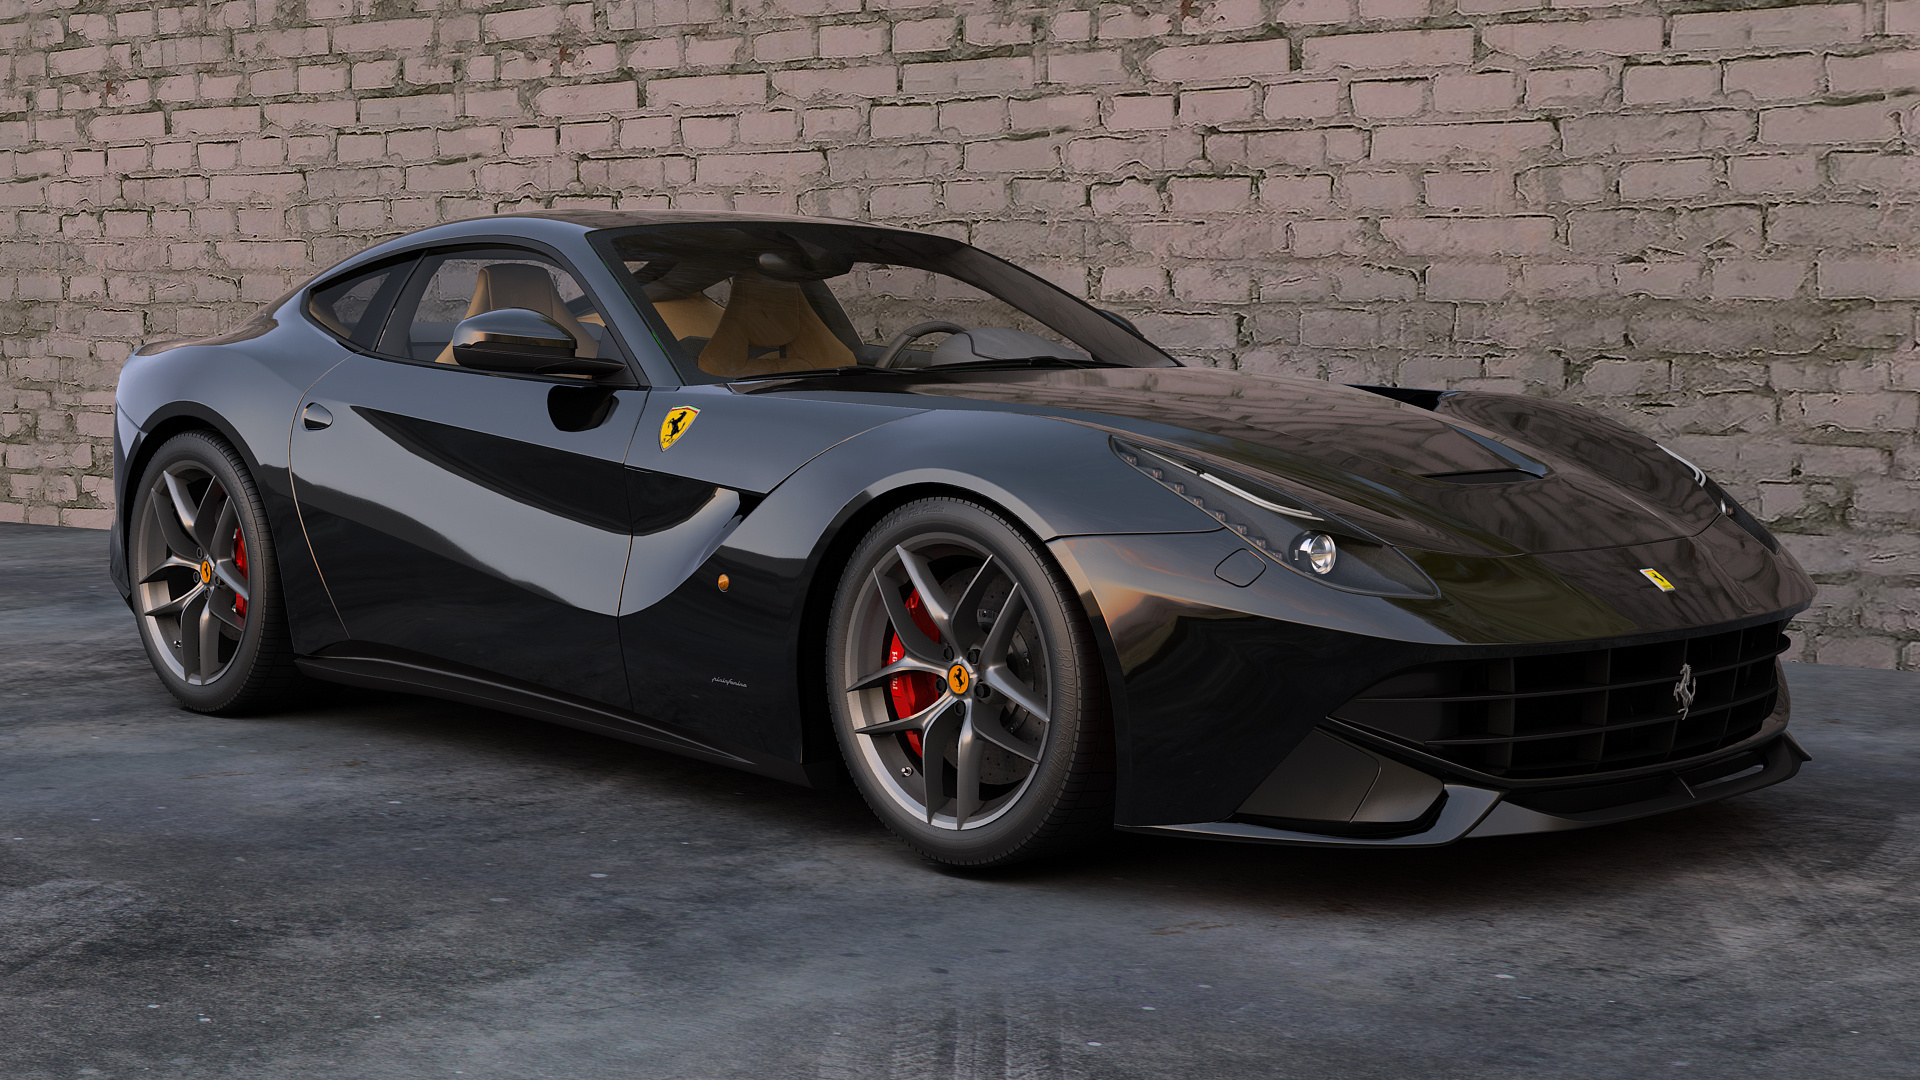 Ferrari F12berlita HD Wallpaper Background Image